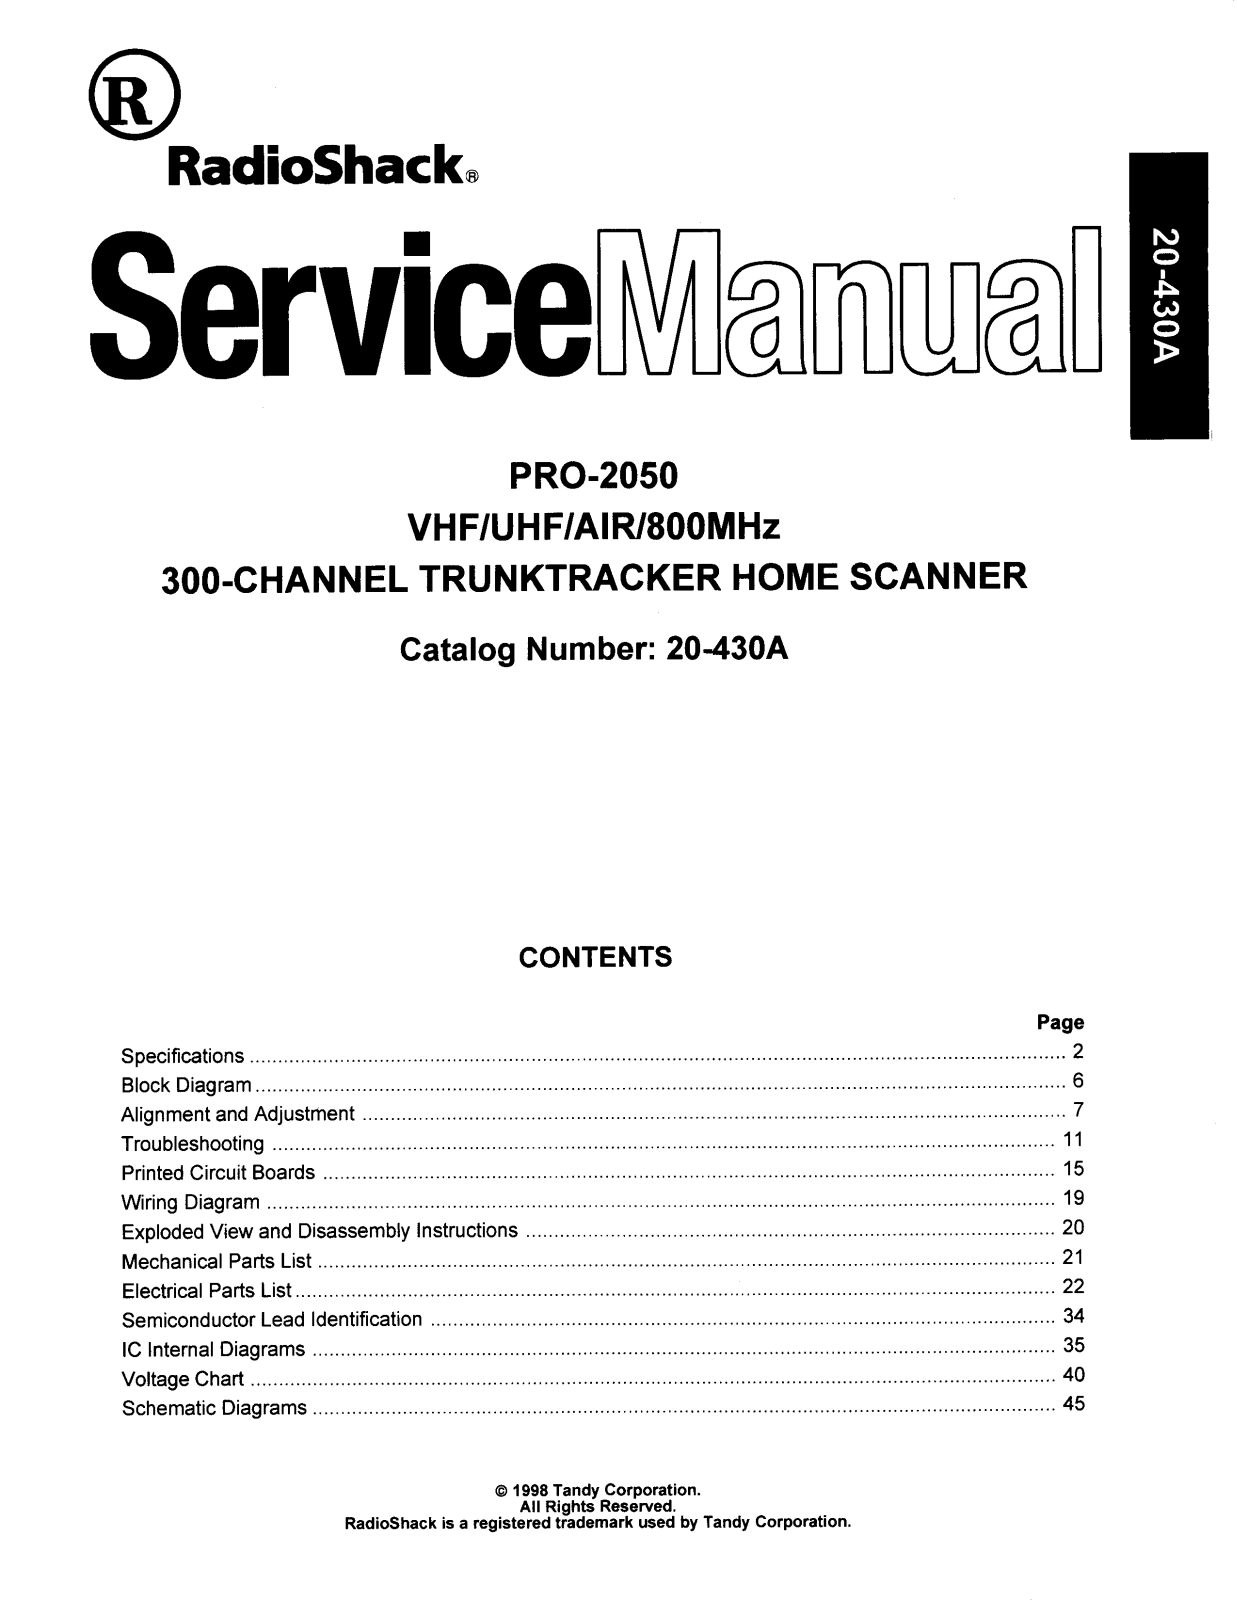 RadioShack PRO-2050 Service Manual